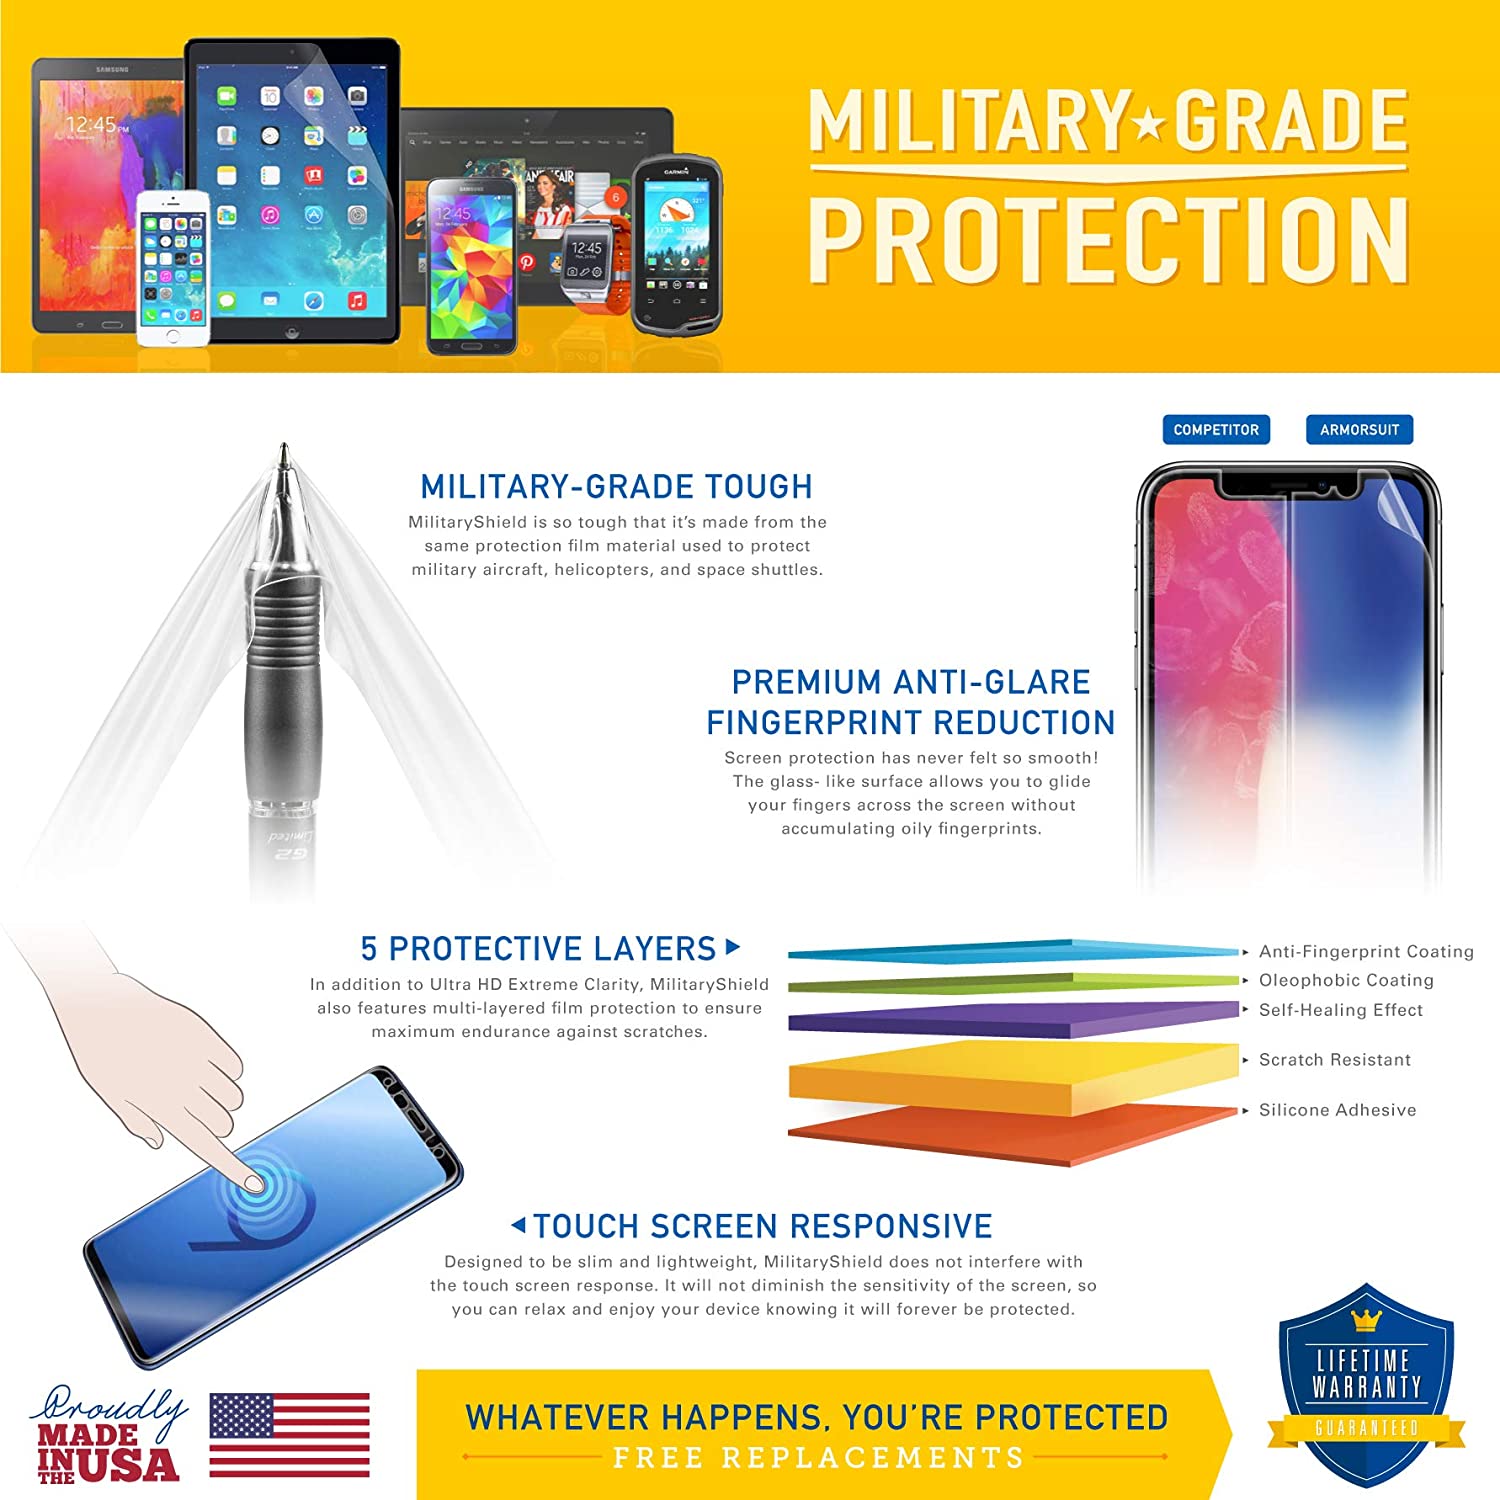 Samsung Galaxy Note 3 Full Body Skin Protector